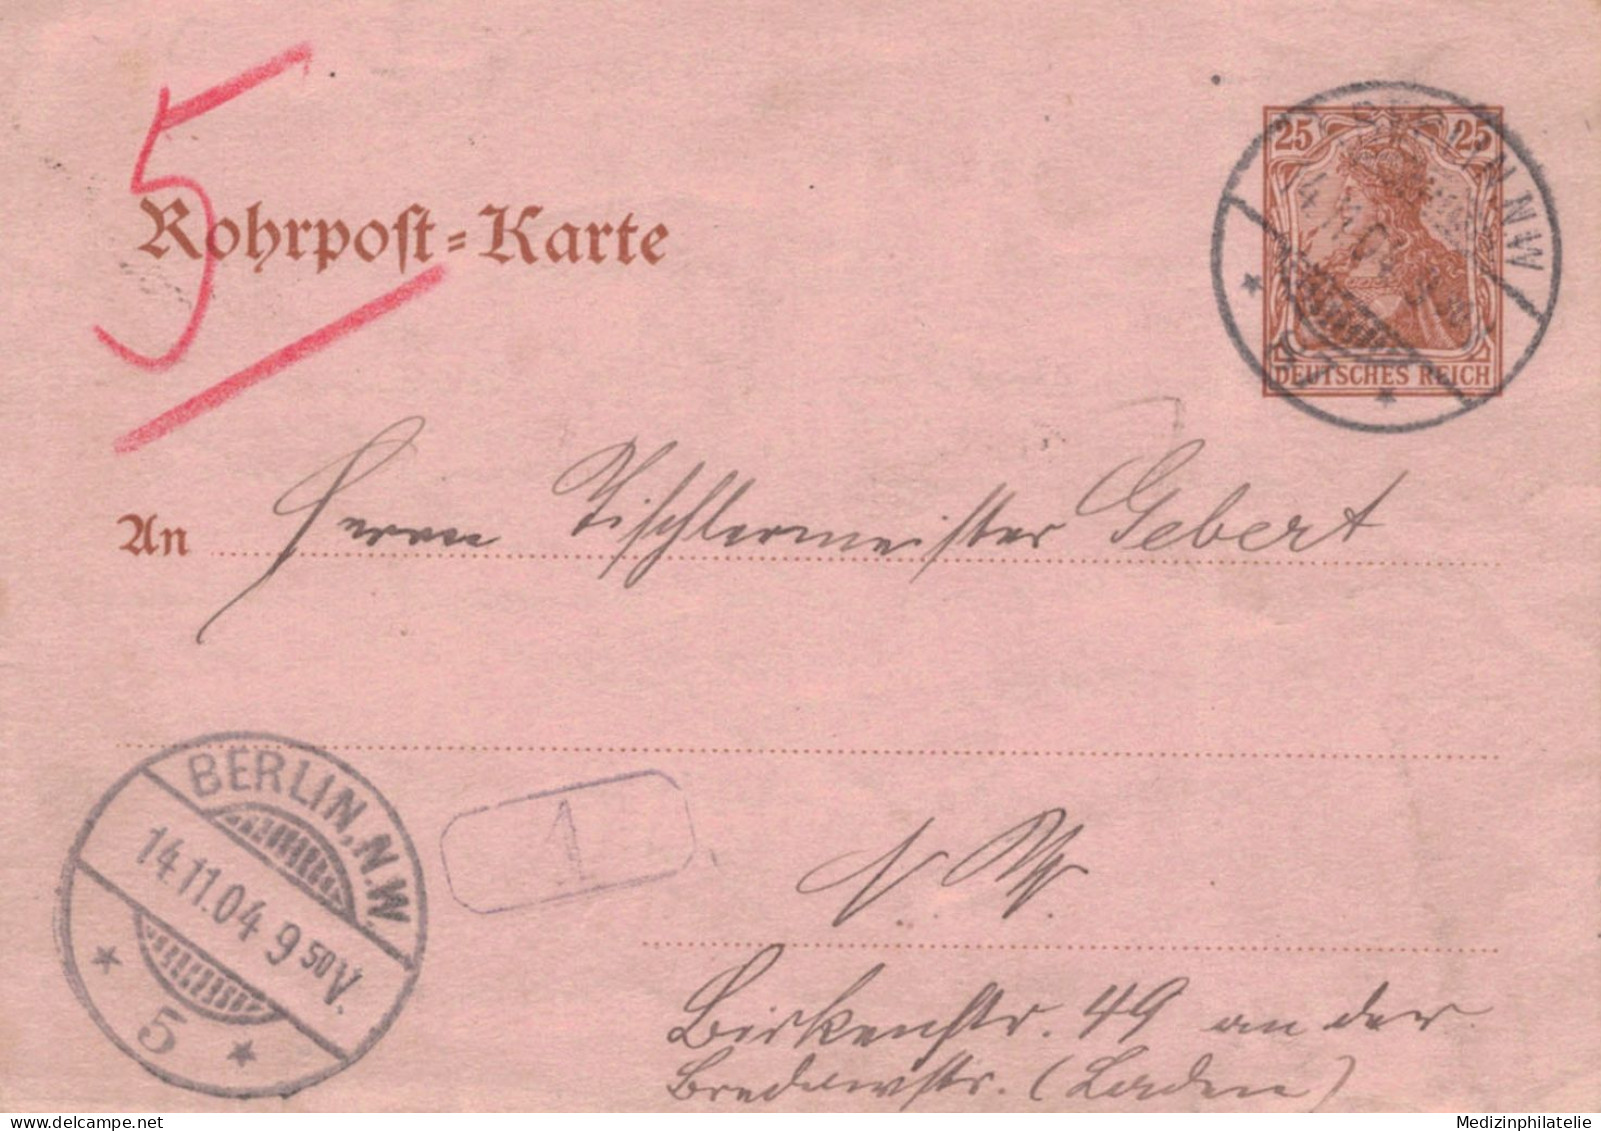 Rohrpost-Karte 25 Pf. Germania - Berlin 87 1904 > 5 09:50 - Cartes Postales